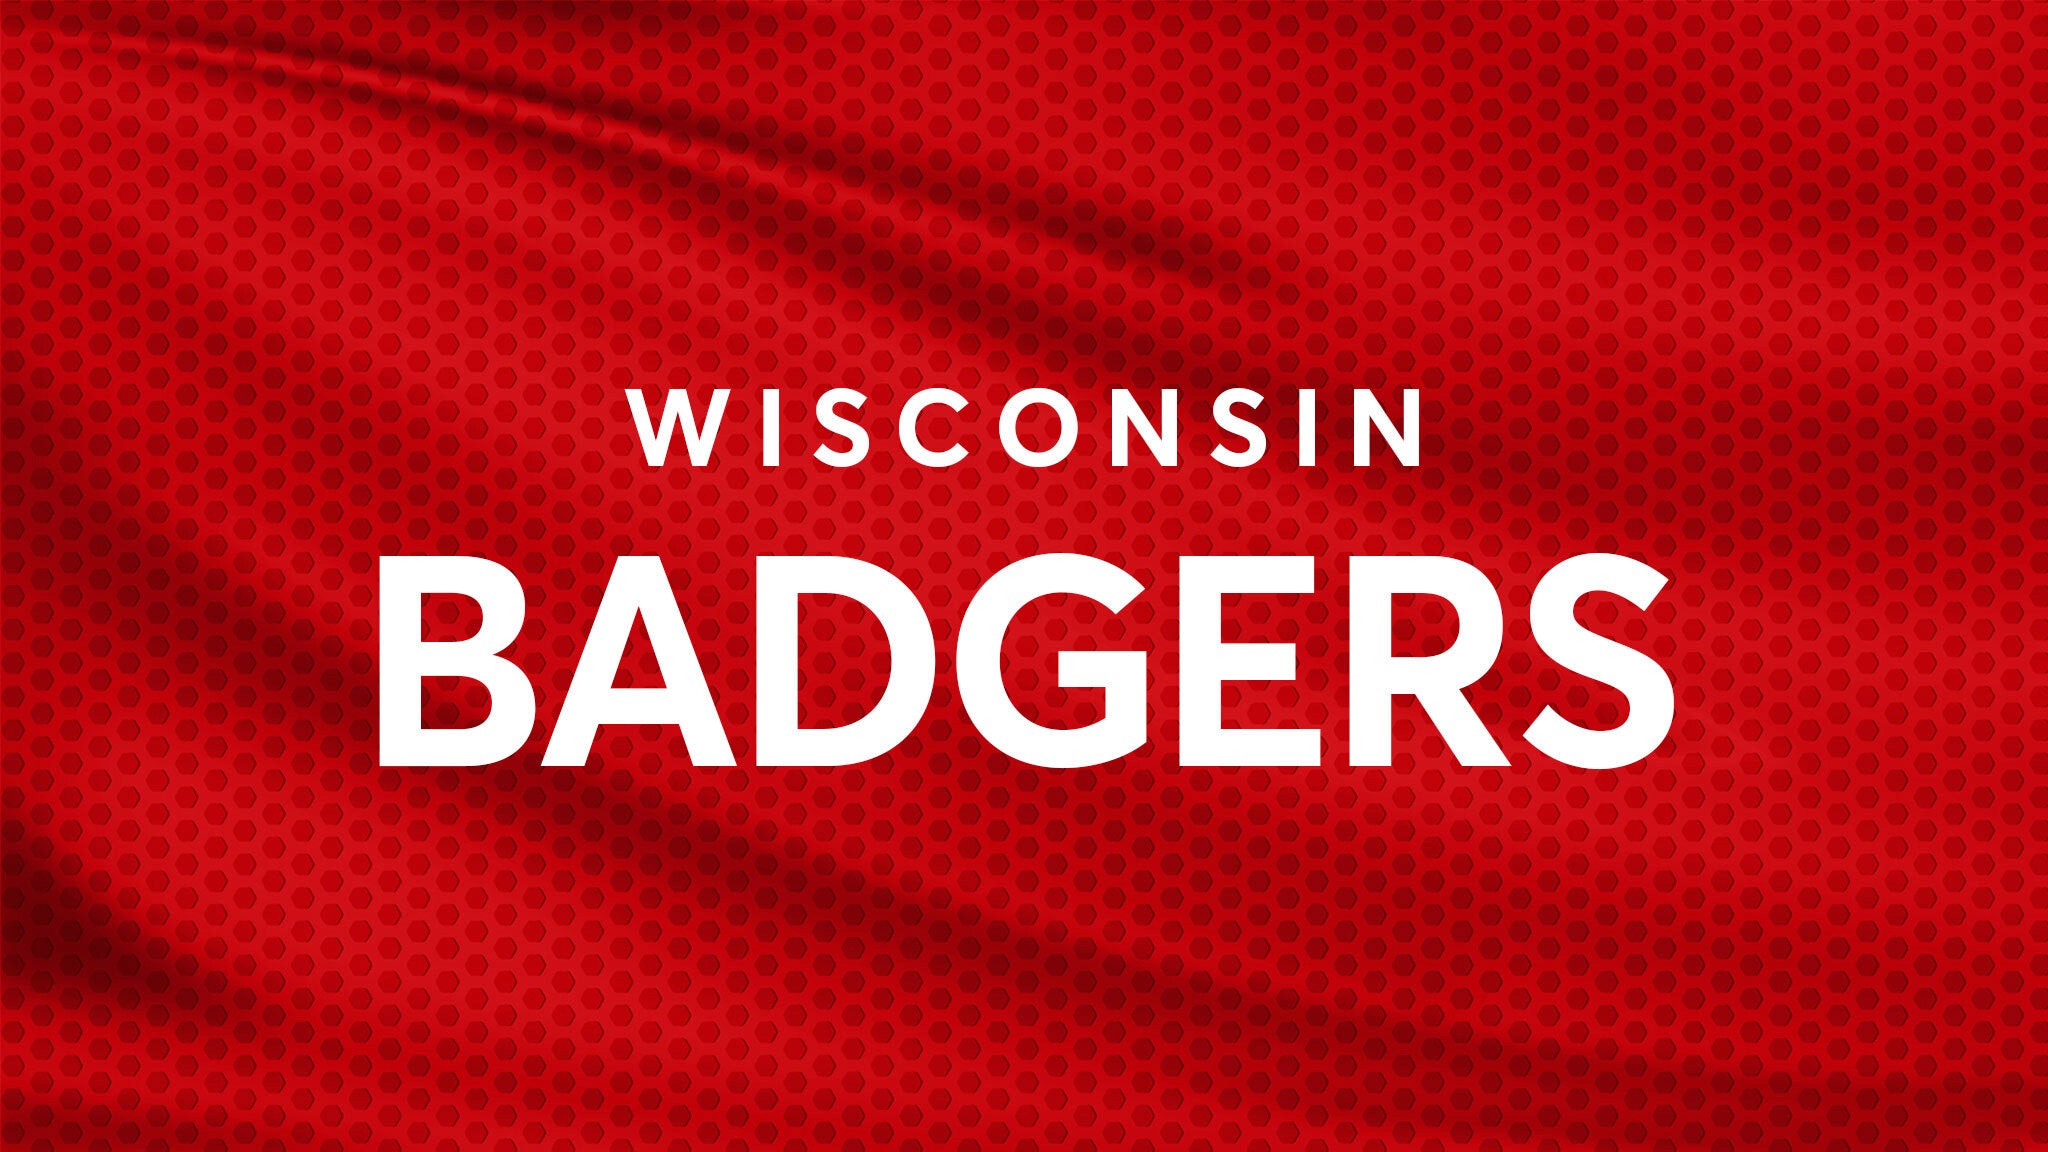 Wisconsin Badgers Football vs. South Dakota Coyotes Football hero